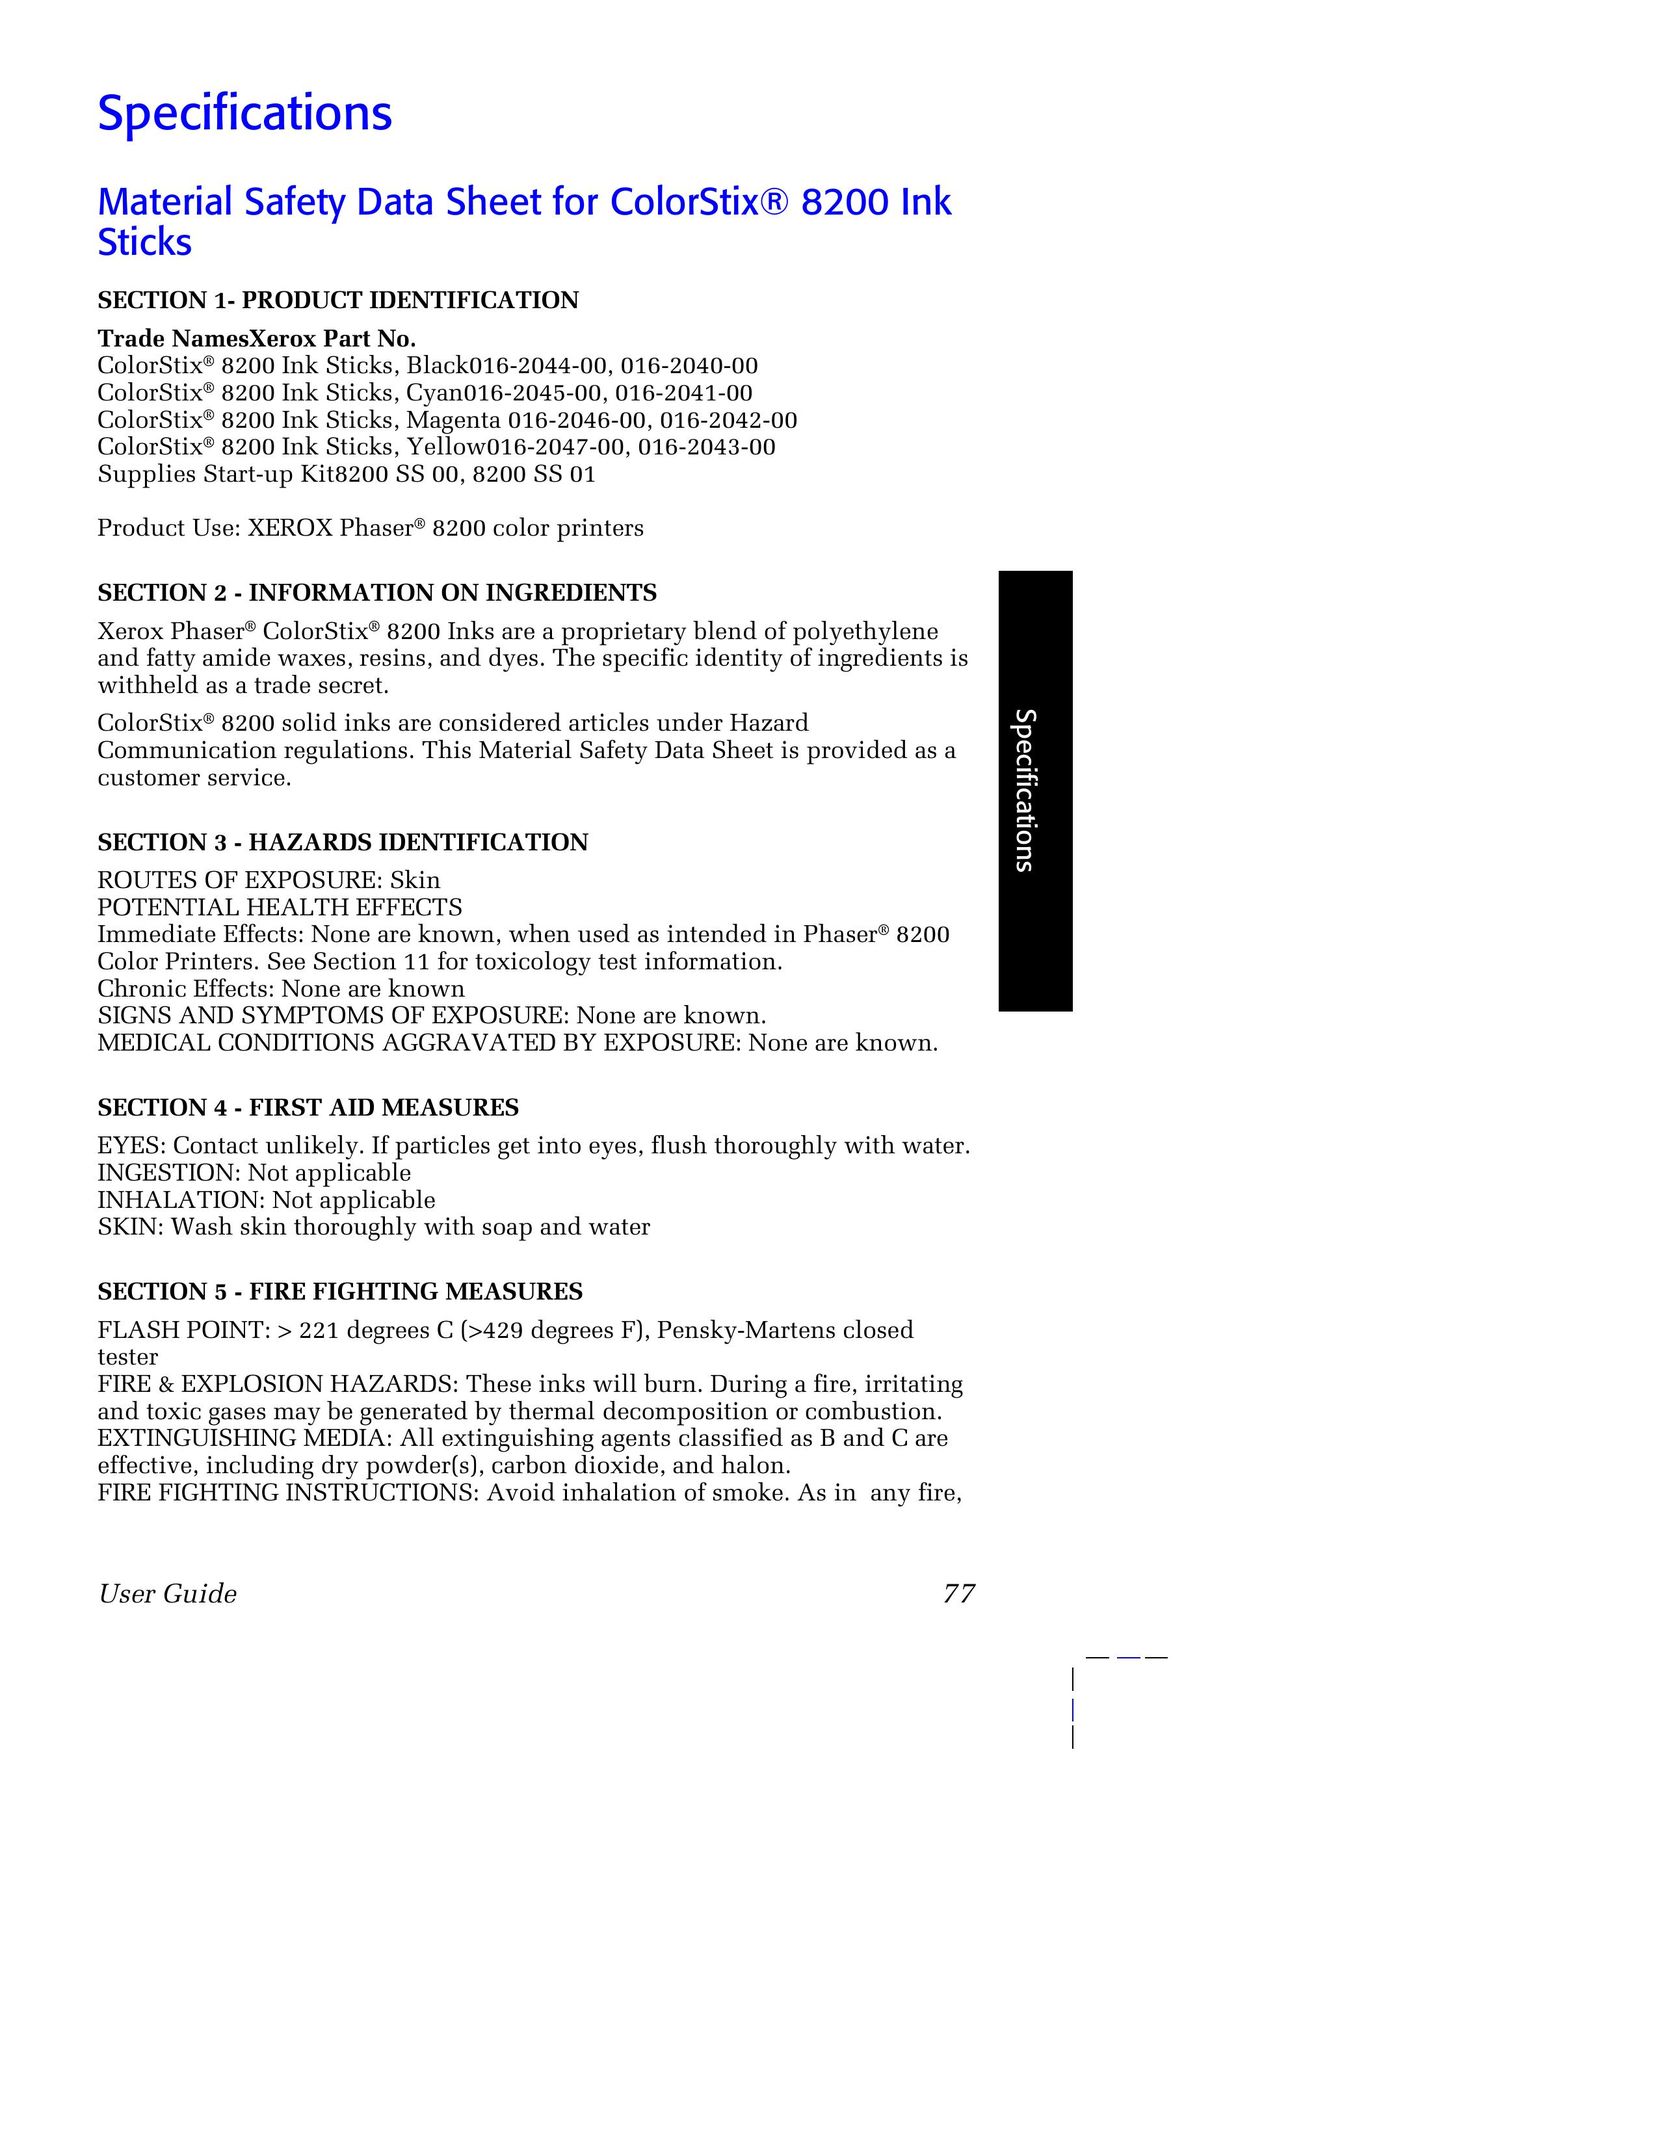 Xerox 016-2045-00 Printer Accessories User Manual